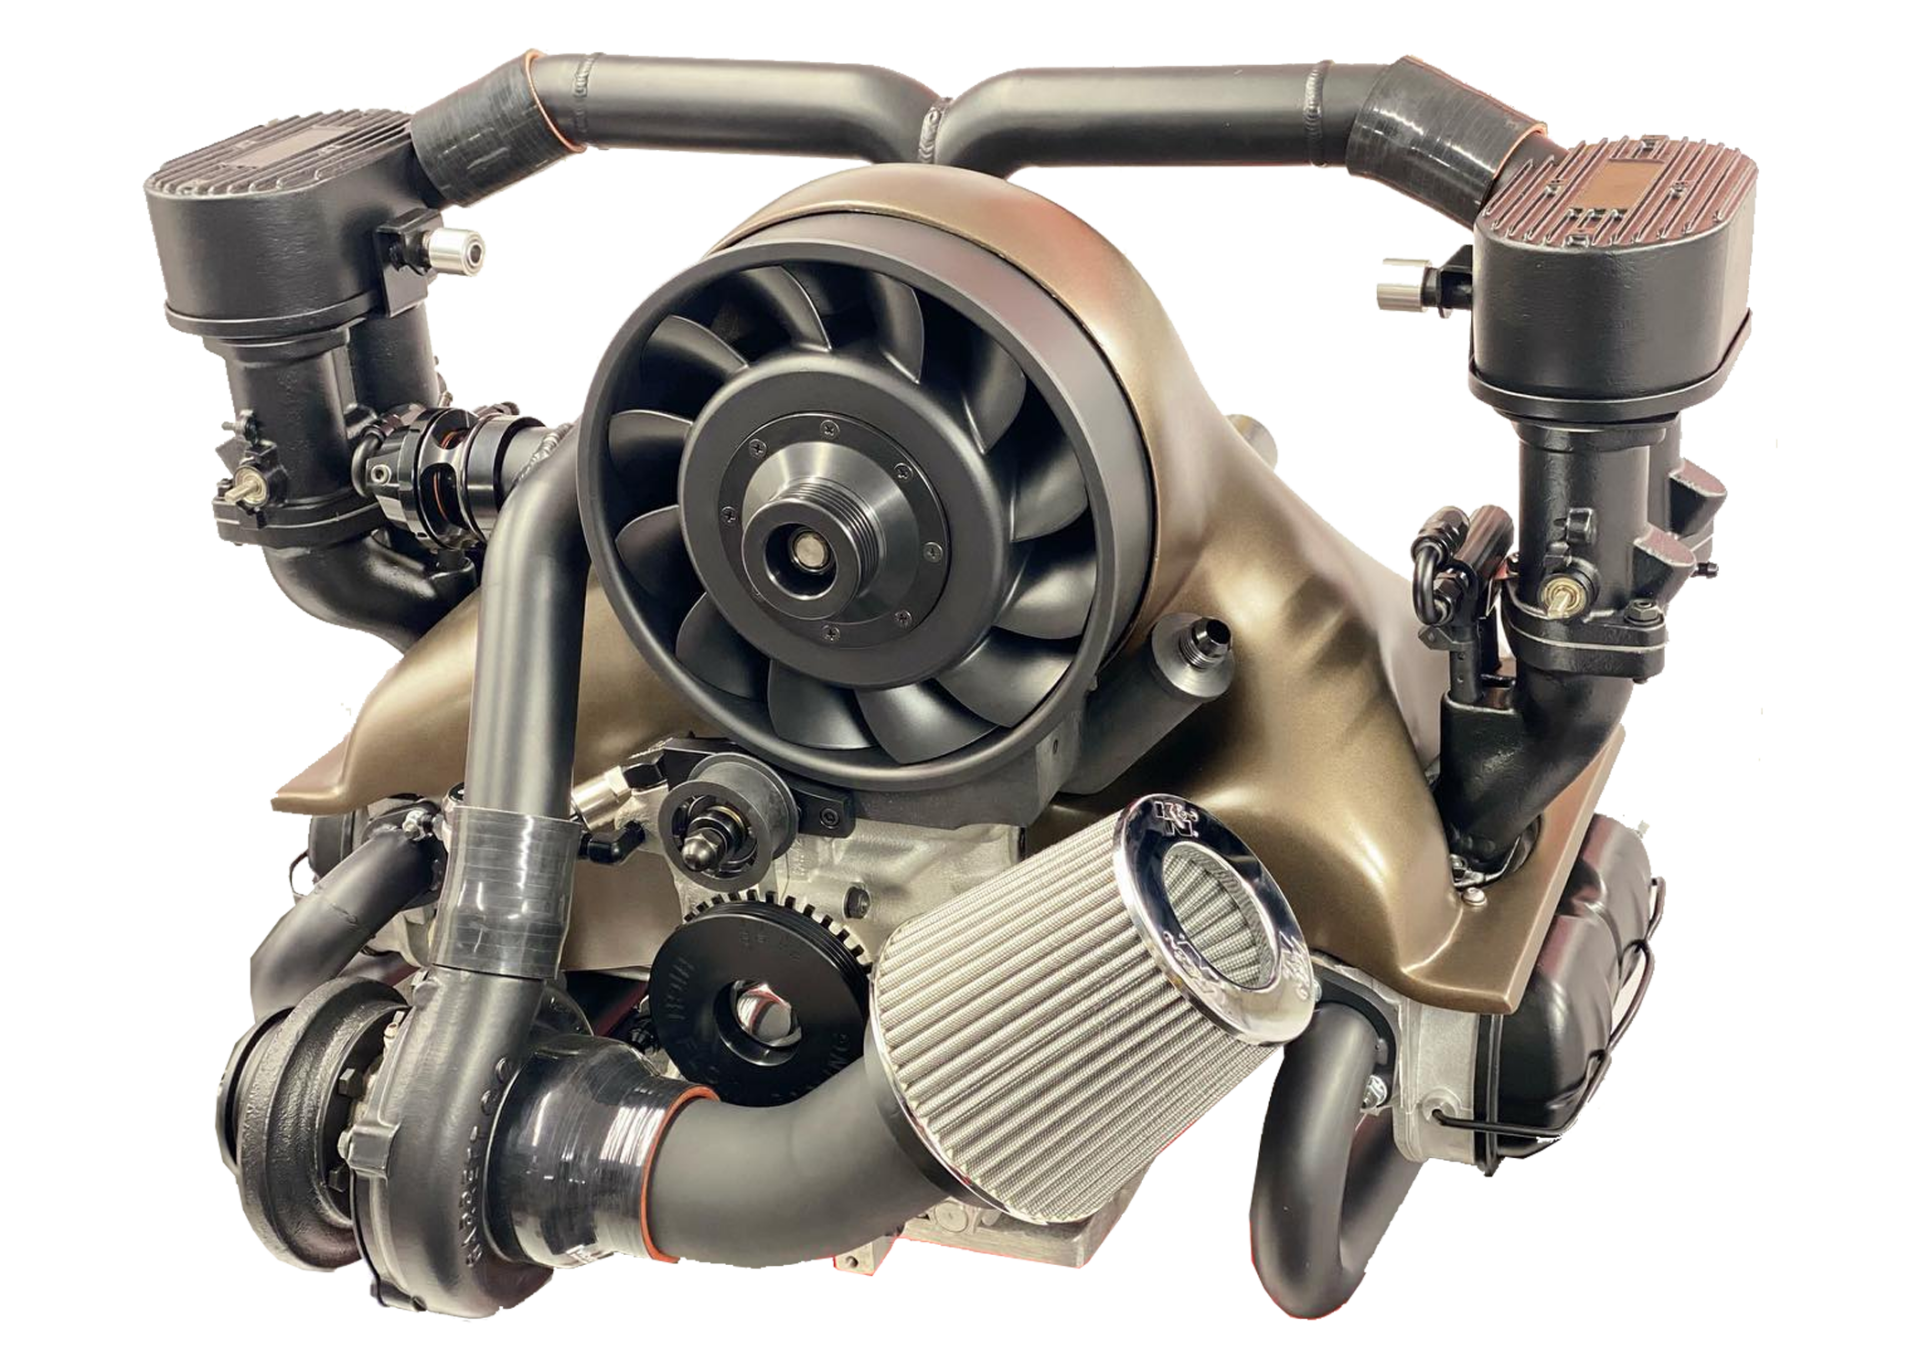 Volkswagen двигатели отзывы. 3g83t турбо двигатель. Vr6 Turbo Manifold. Tech Parts.